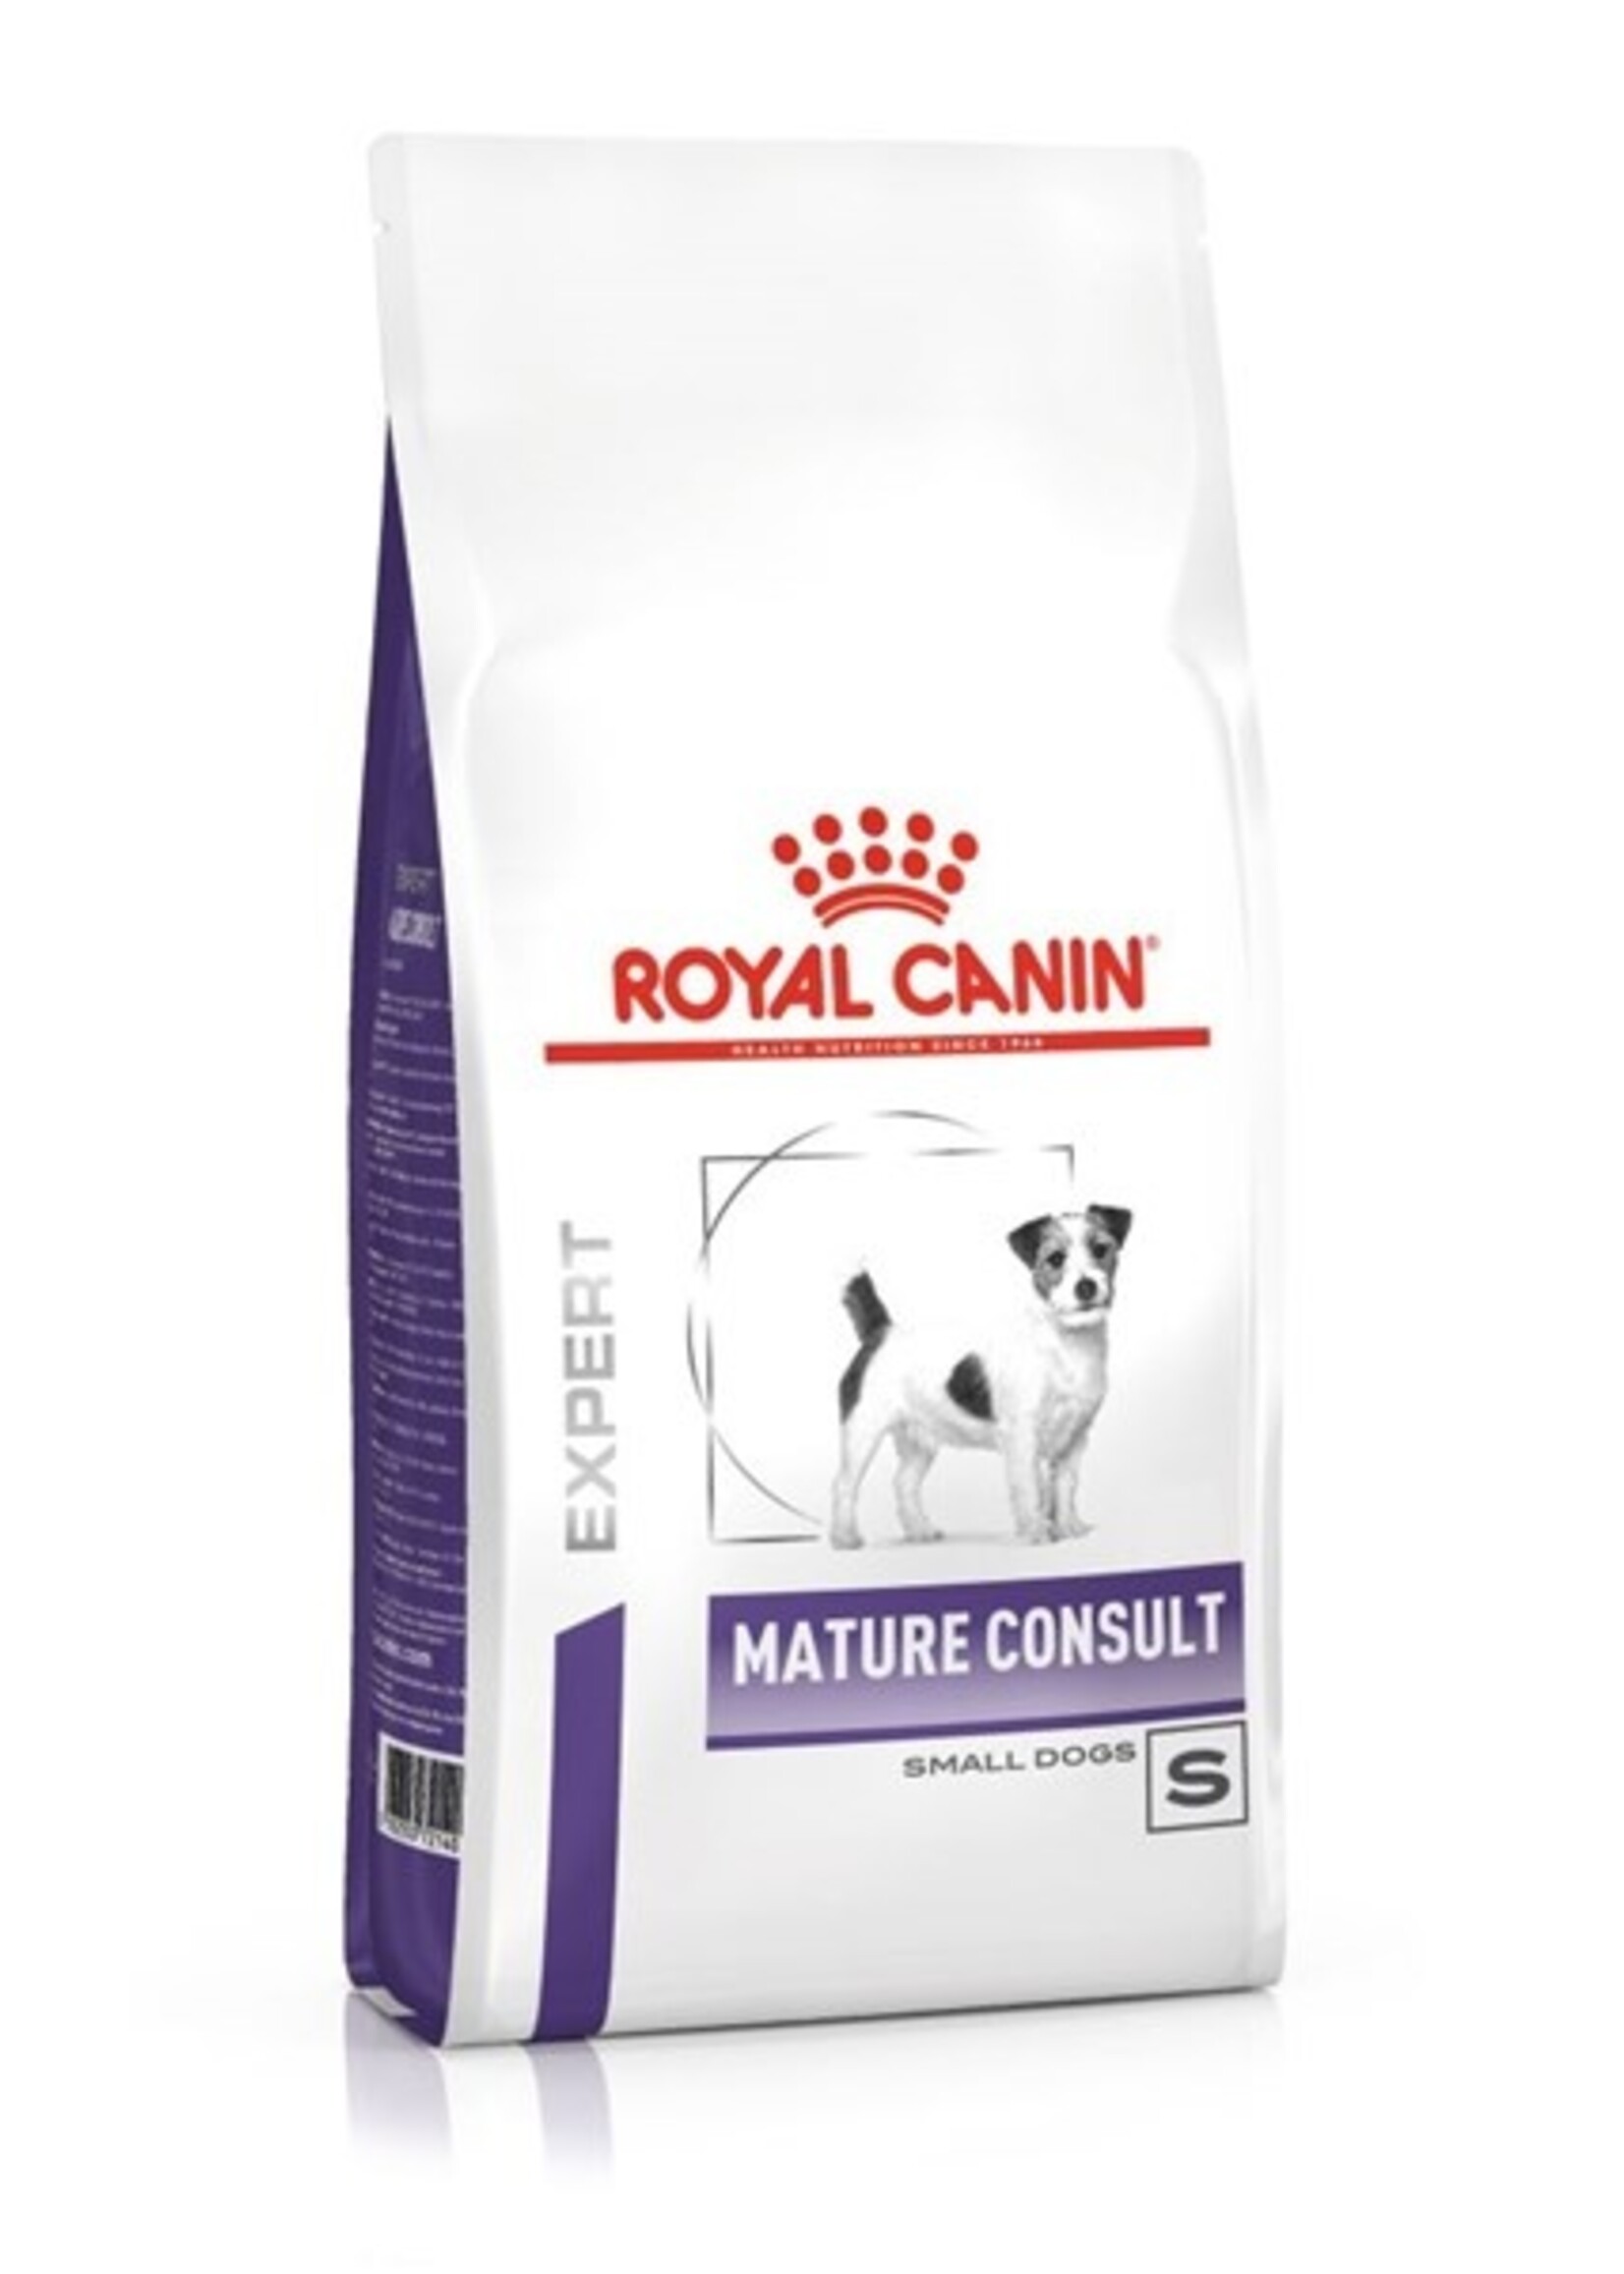 Royal Canin Royal Canin Mature Consult Small Breed Dog 8kg